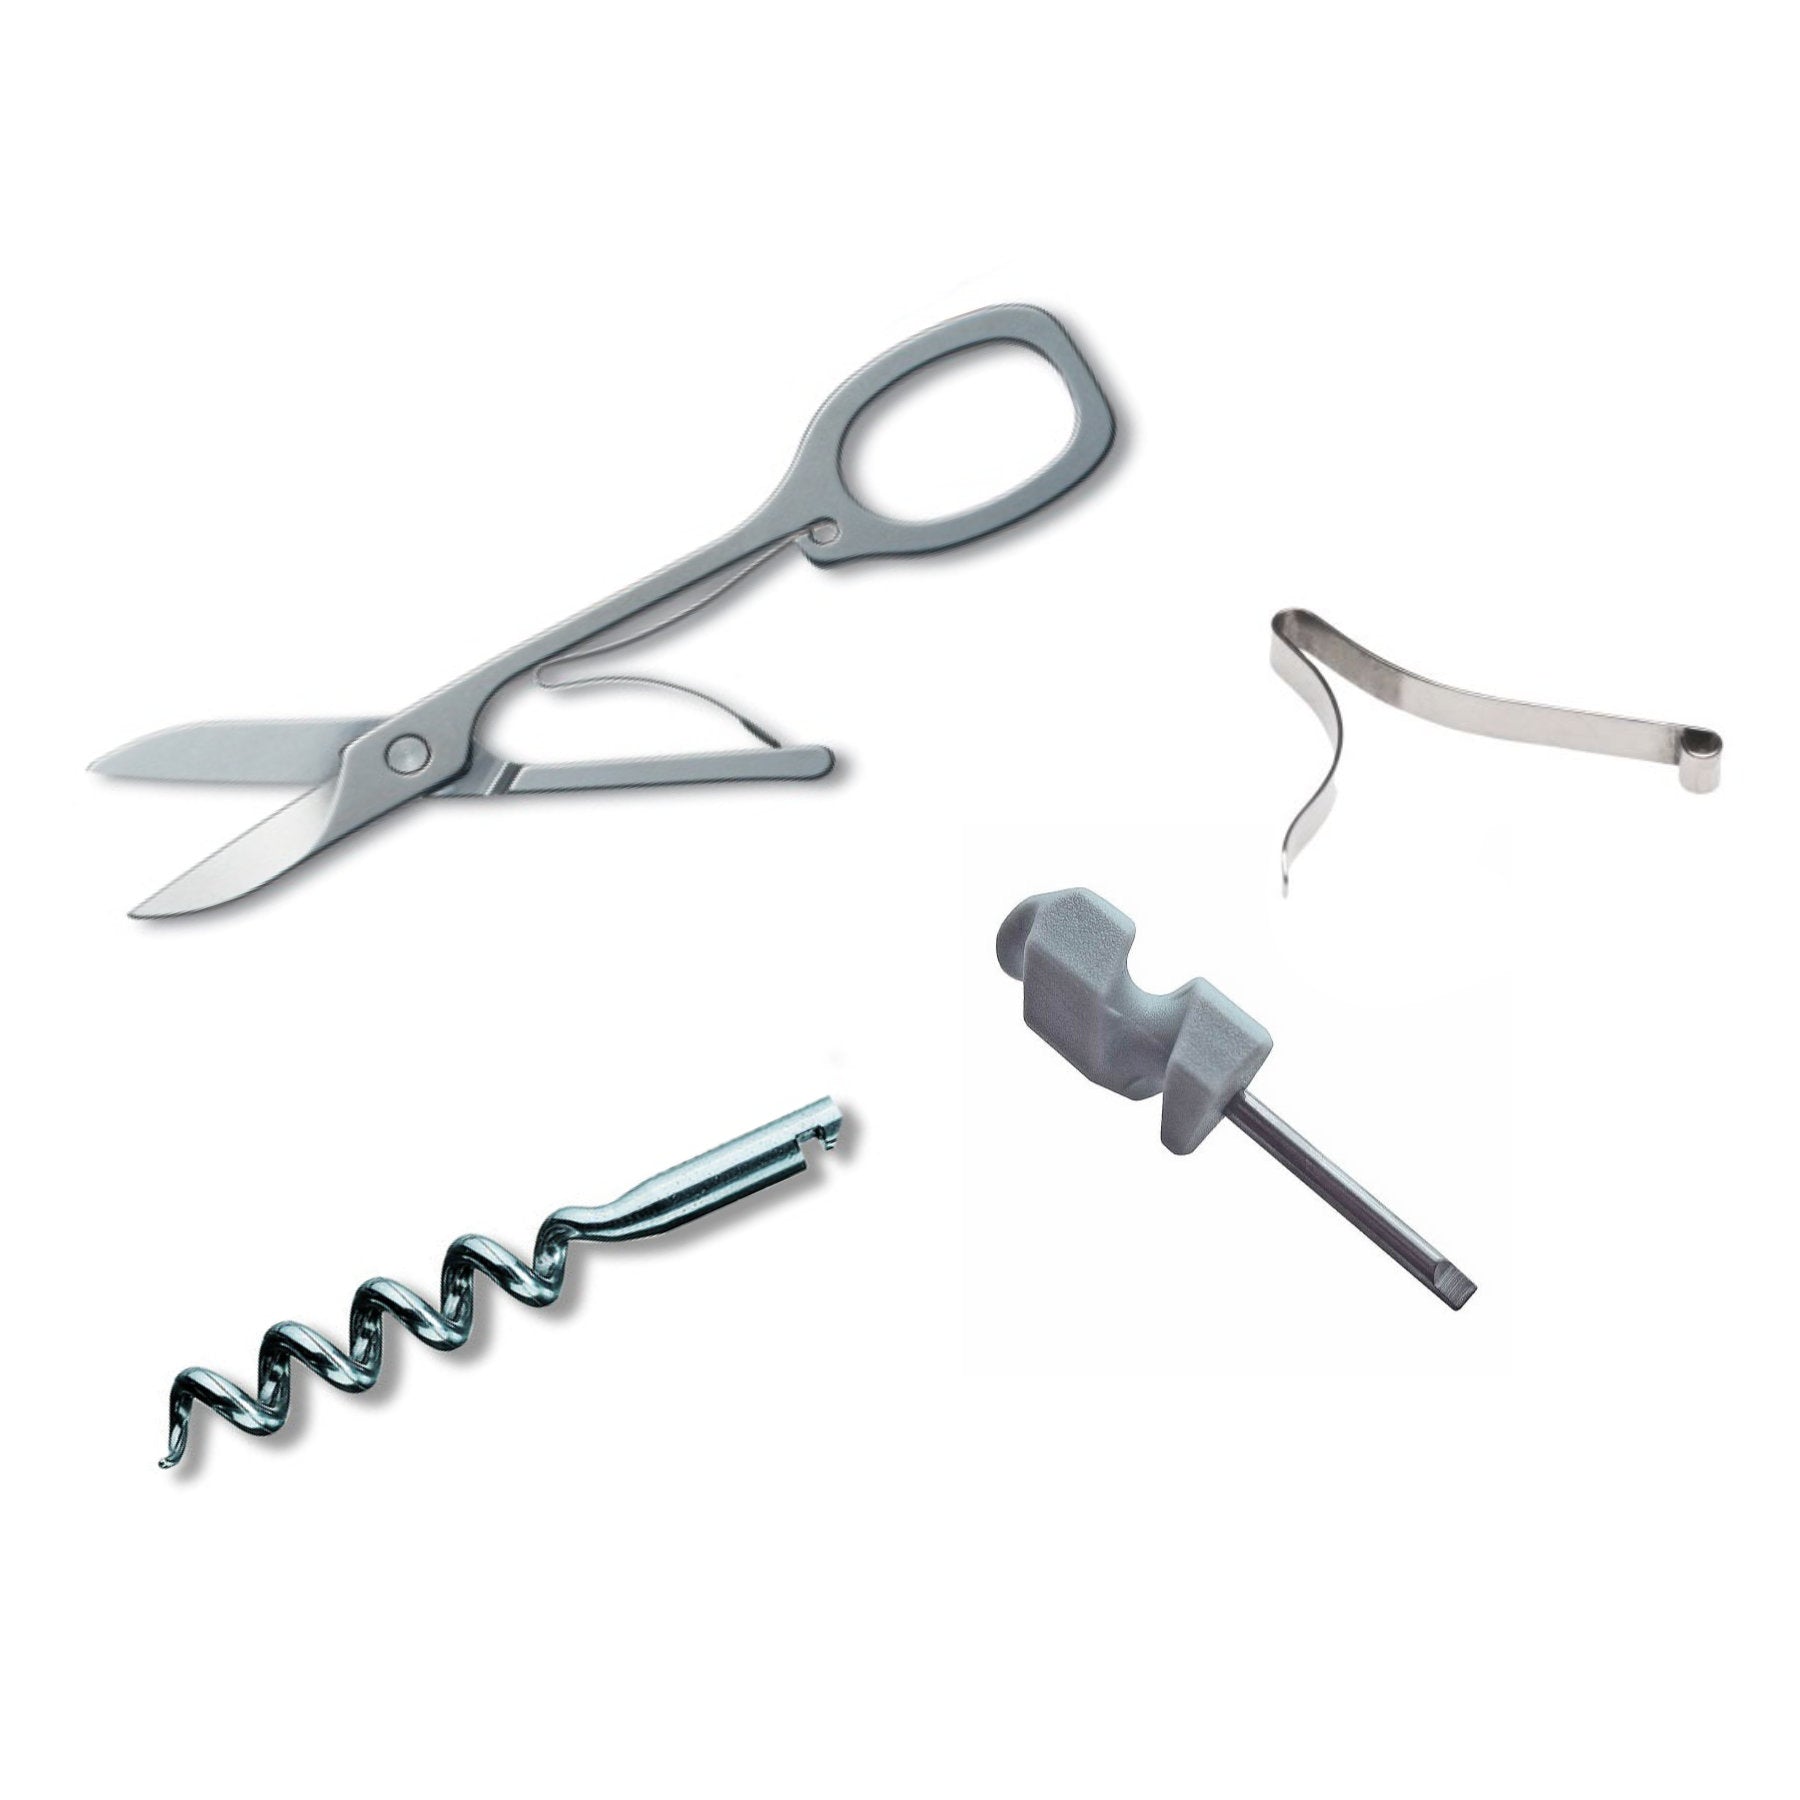 Victorinox SwissCard Replacement Scissors at Swiss Knife Shop